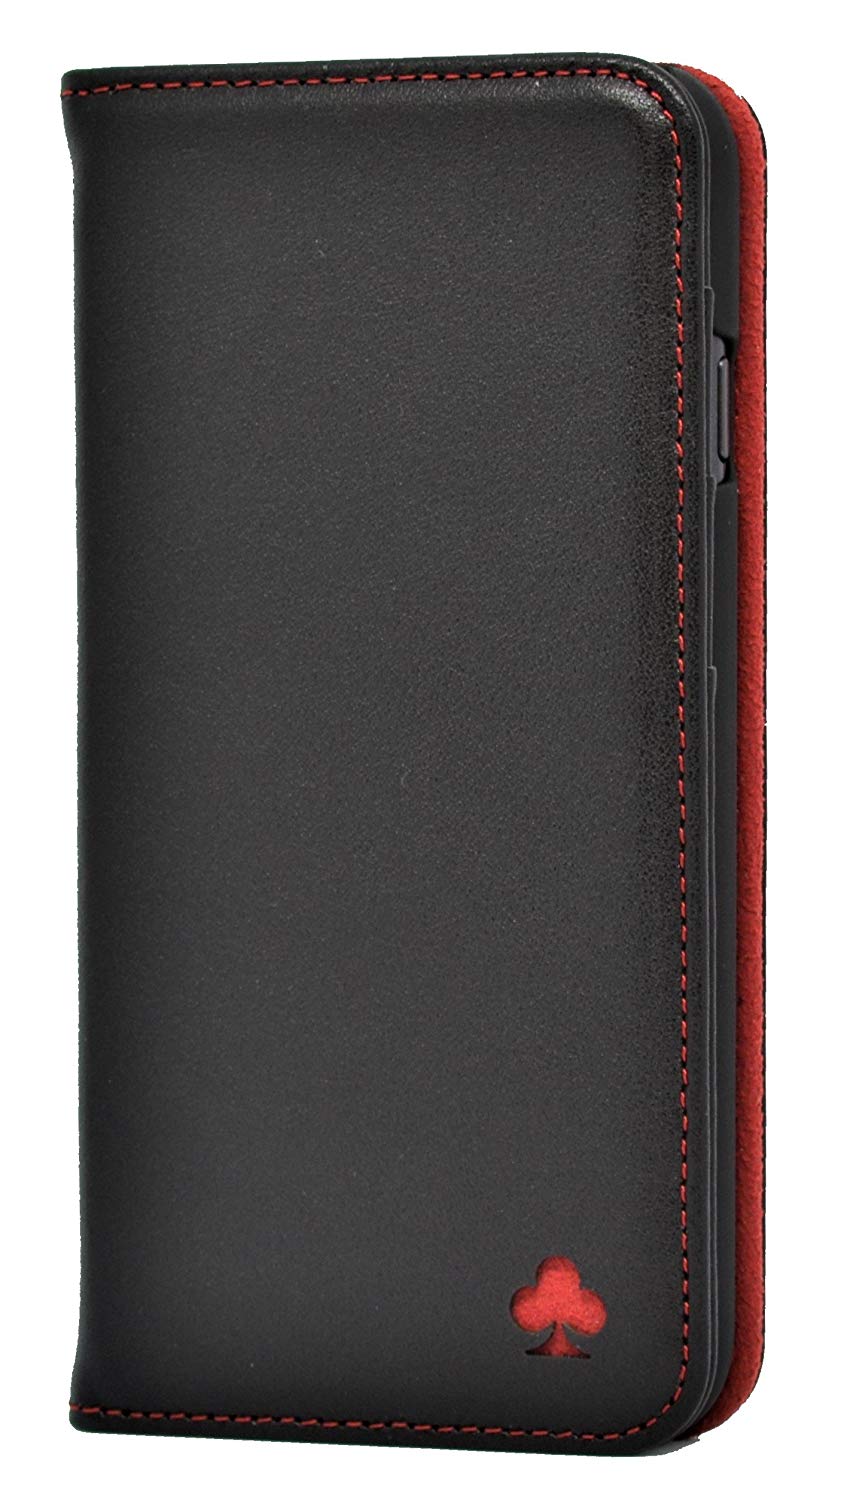 iPhone 6 Plus / 6S Plus Leather Case. Premium Slim Genuine Leather Stand Case/Cover/Wallet (Black & Red)